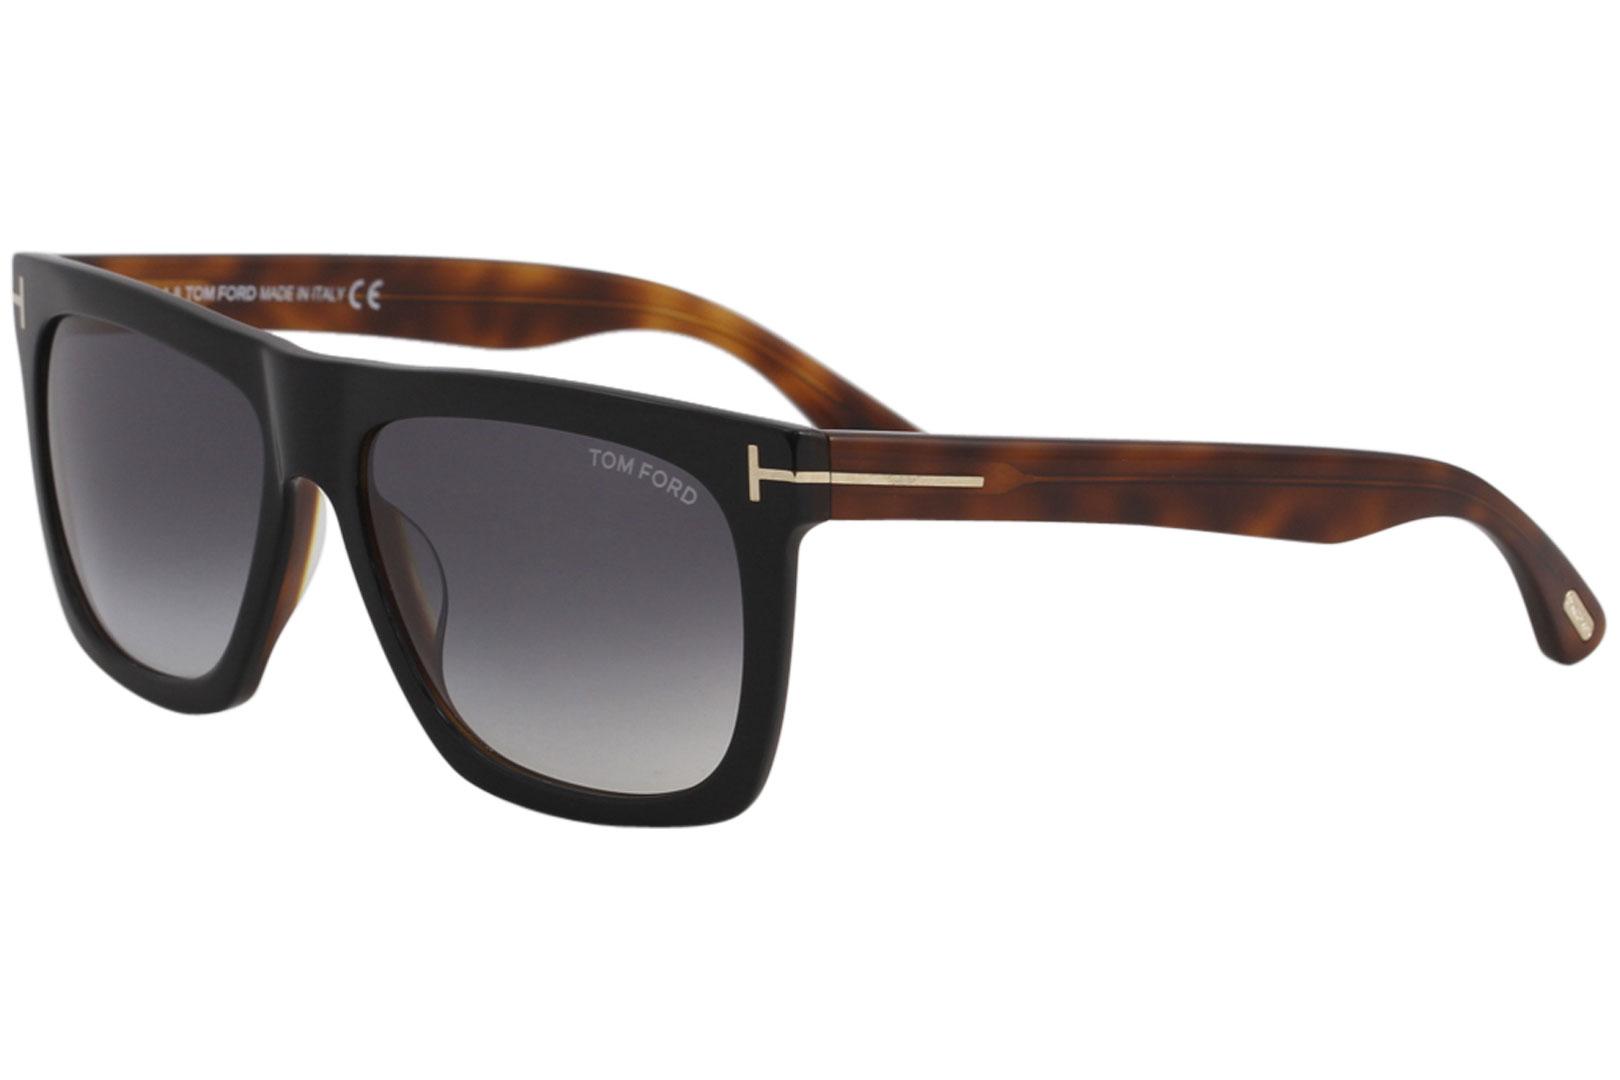 Tom Ford Sunglasses Women's Morgan TF513 01W Black/Blue Gradient 57mm ...